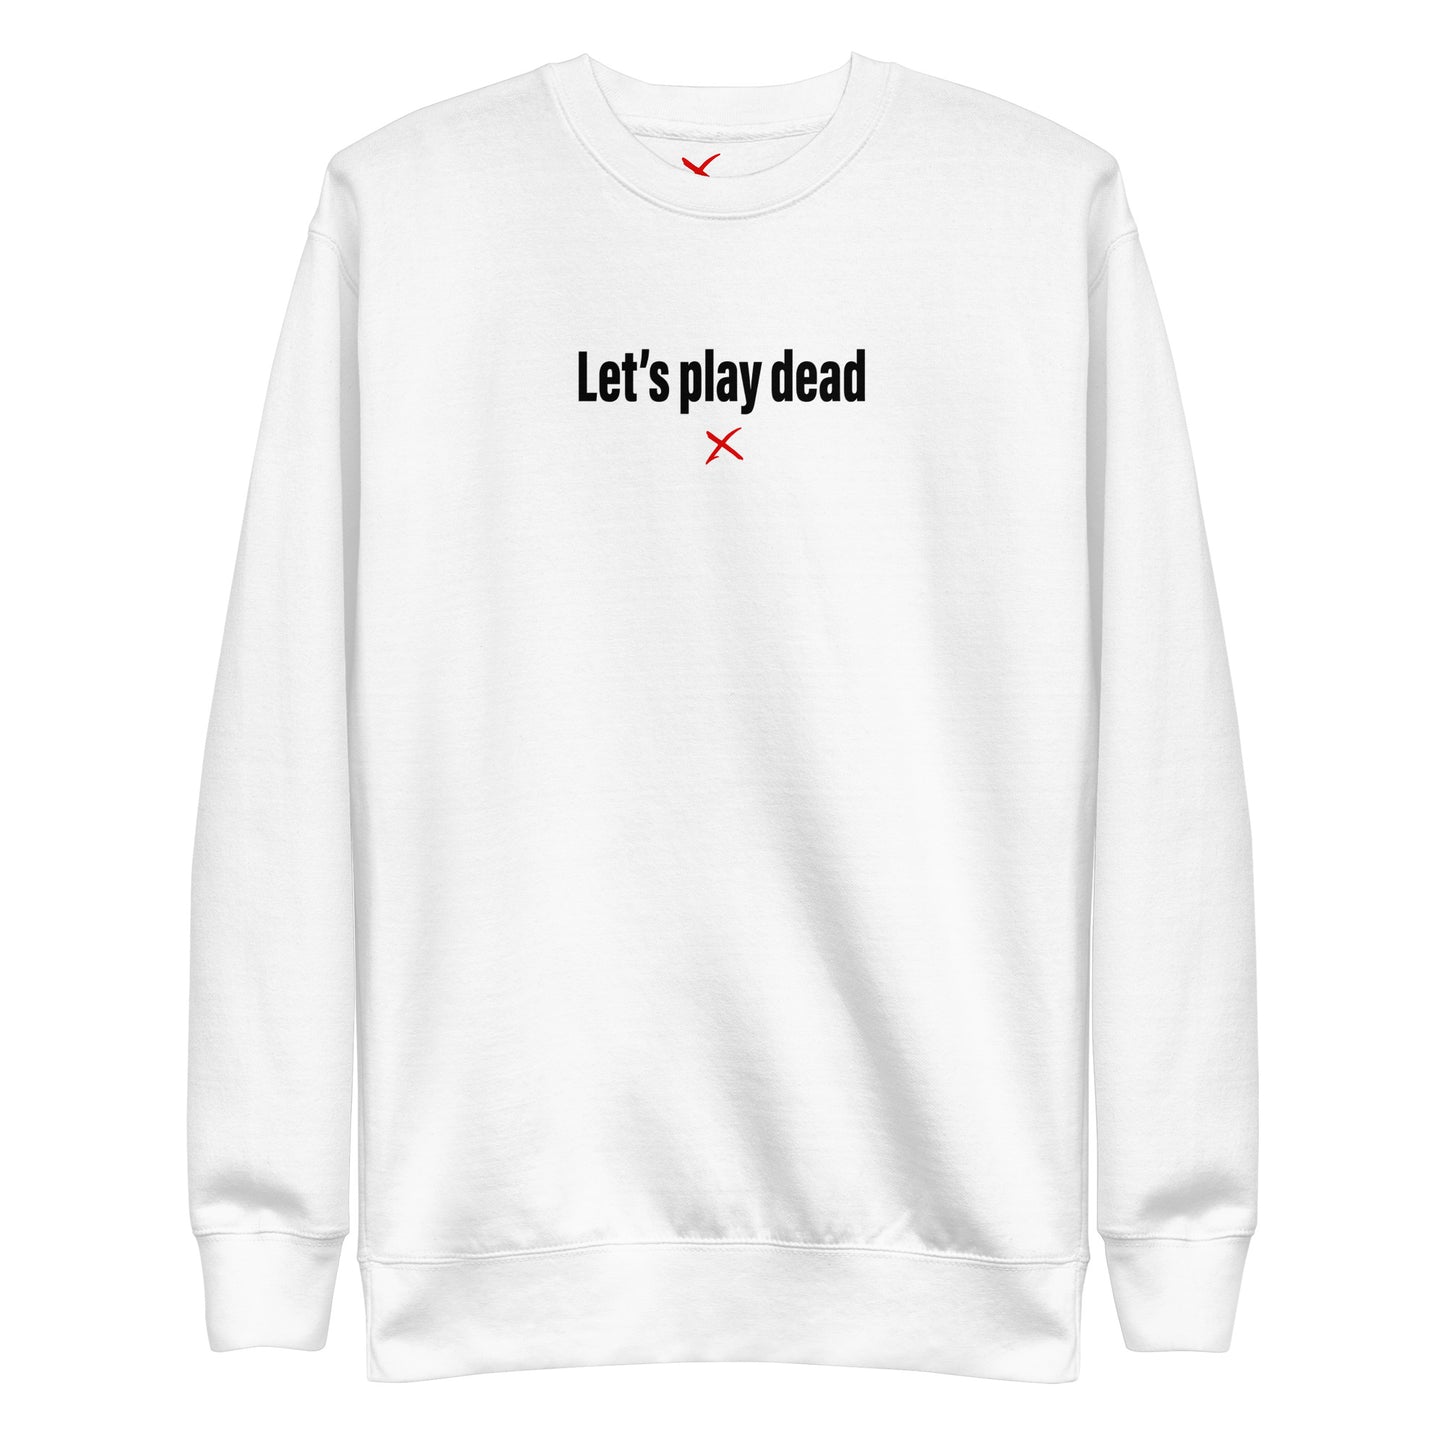 Let's play dead - Sweatshirt